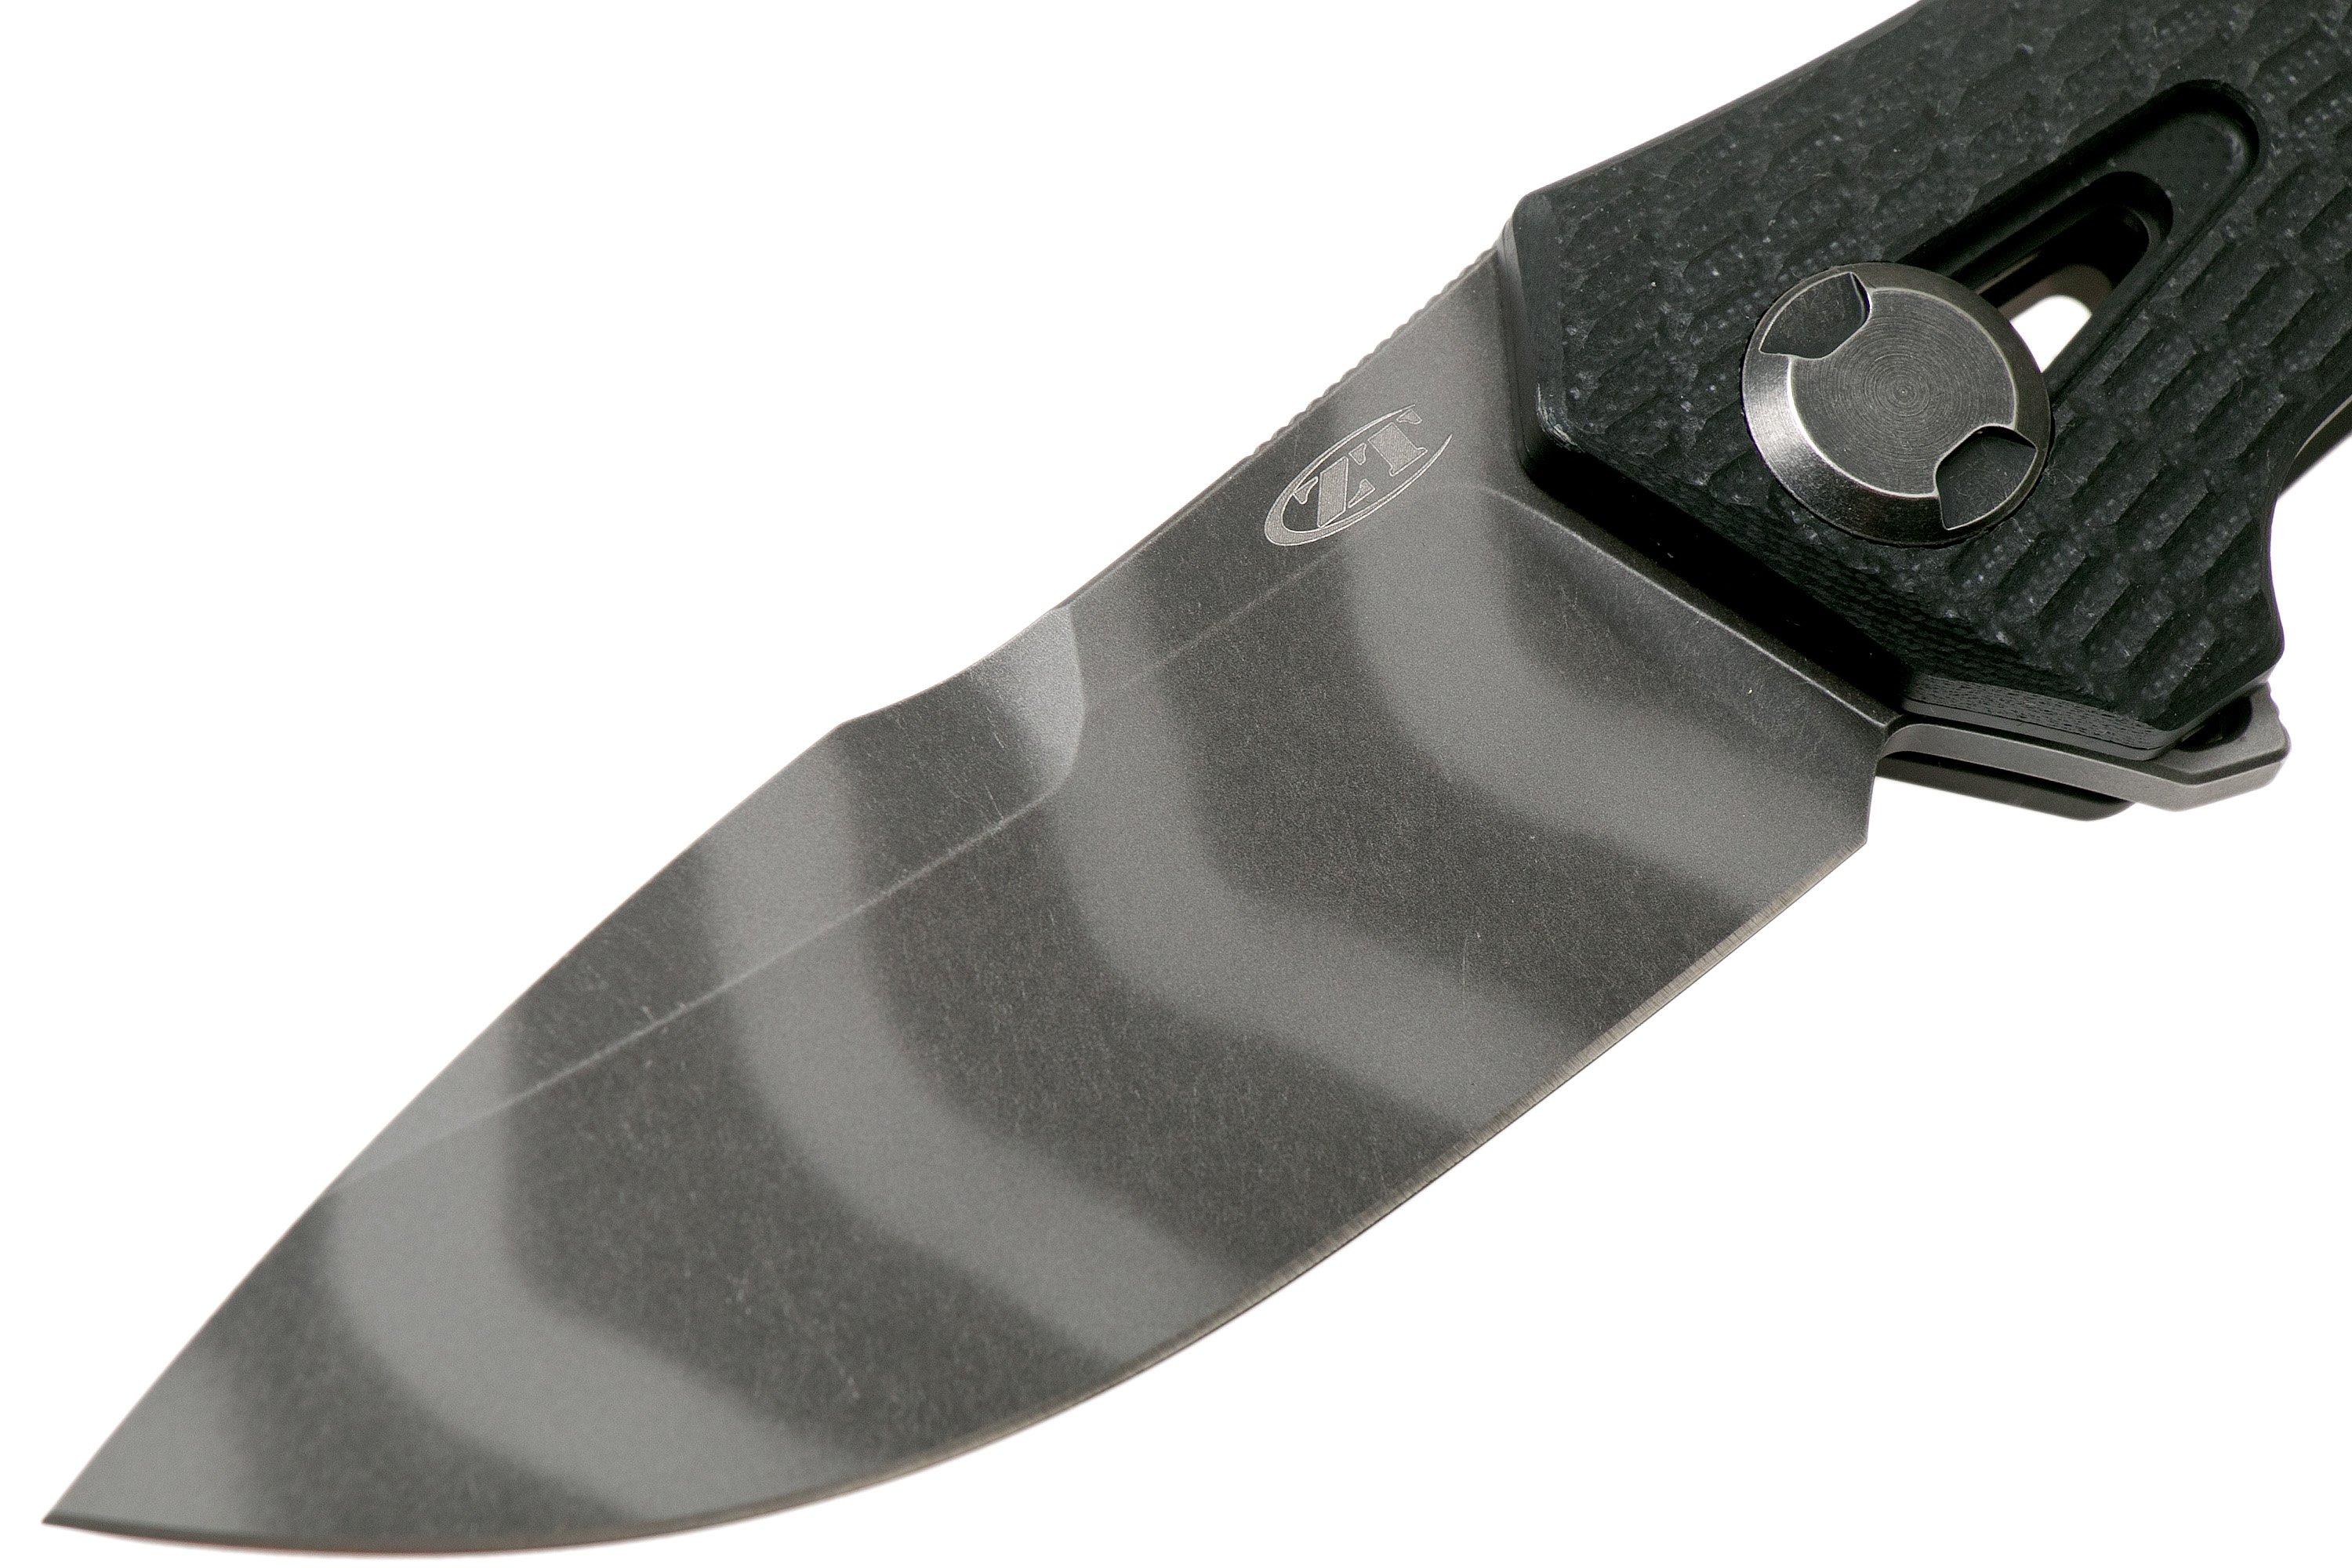 Zero Tolerance 0308BLKTS Black, Tiger Stripe pocket knife 